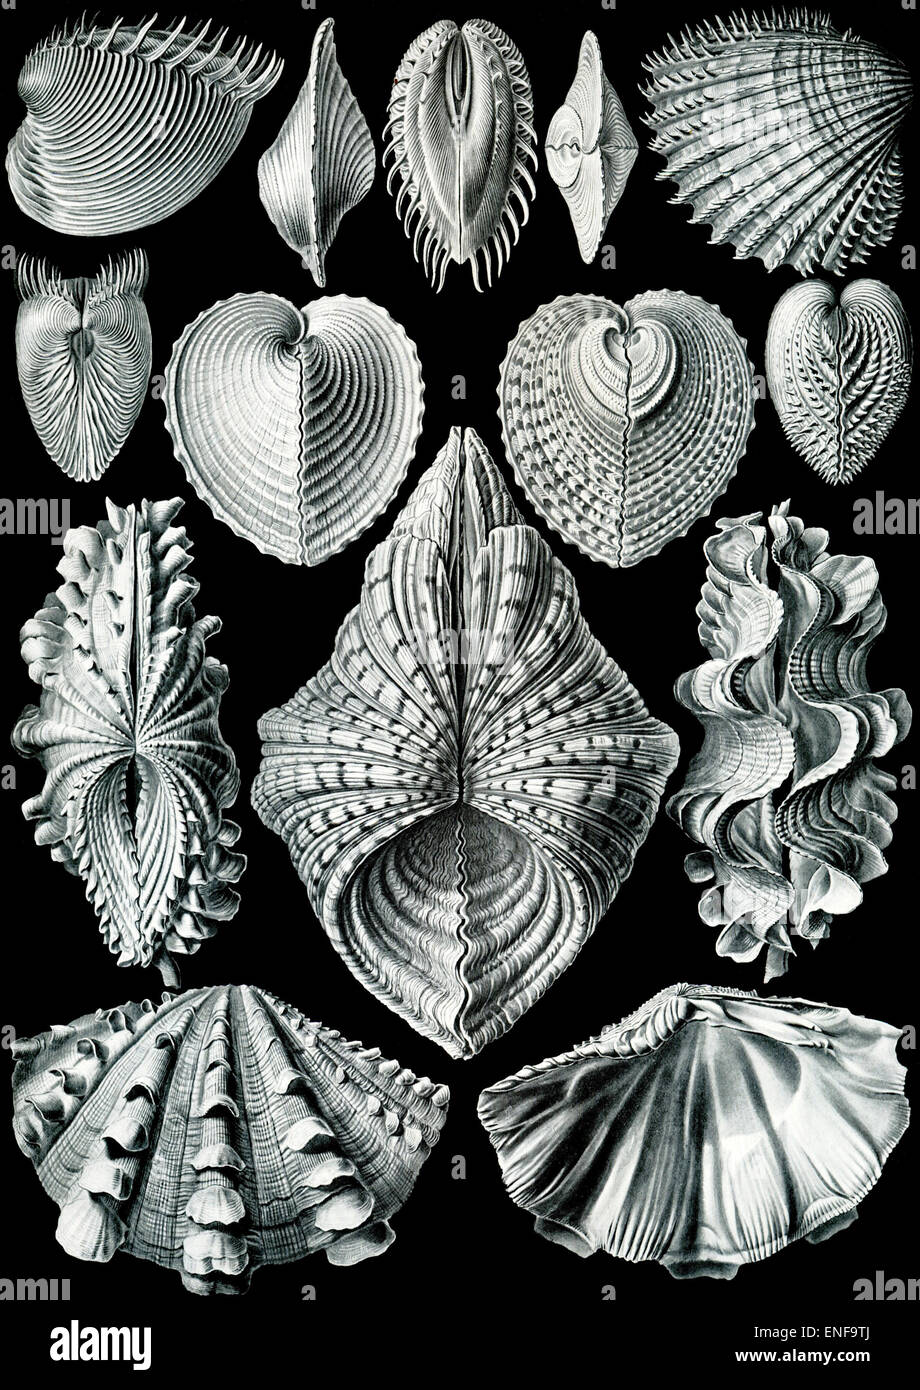 Acephala Bivalvia (mollusques), par Ernst Haeckel, 1904 - éditorial uniquement. Banque D'Images